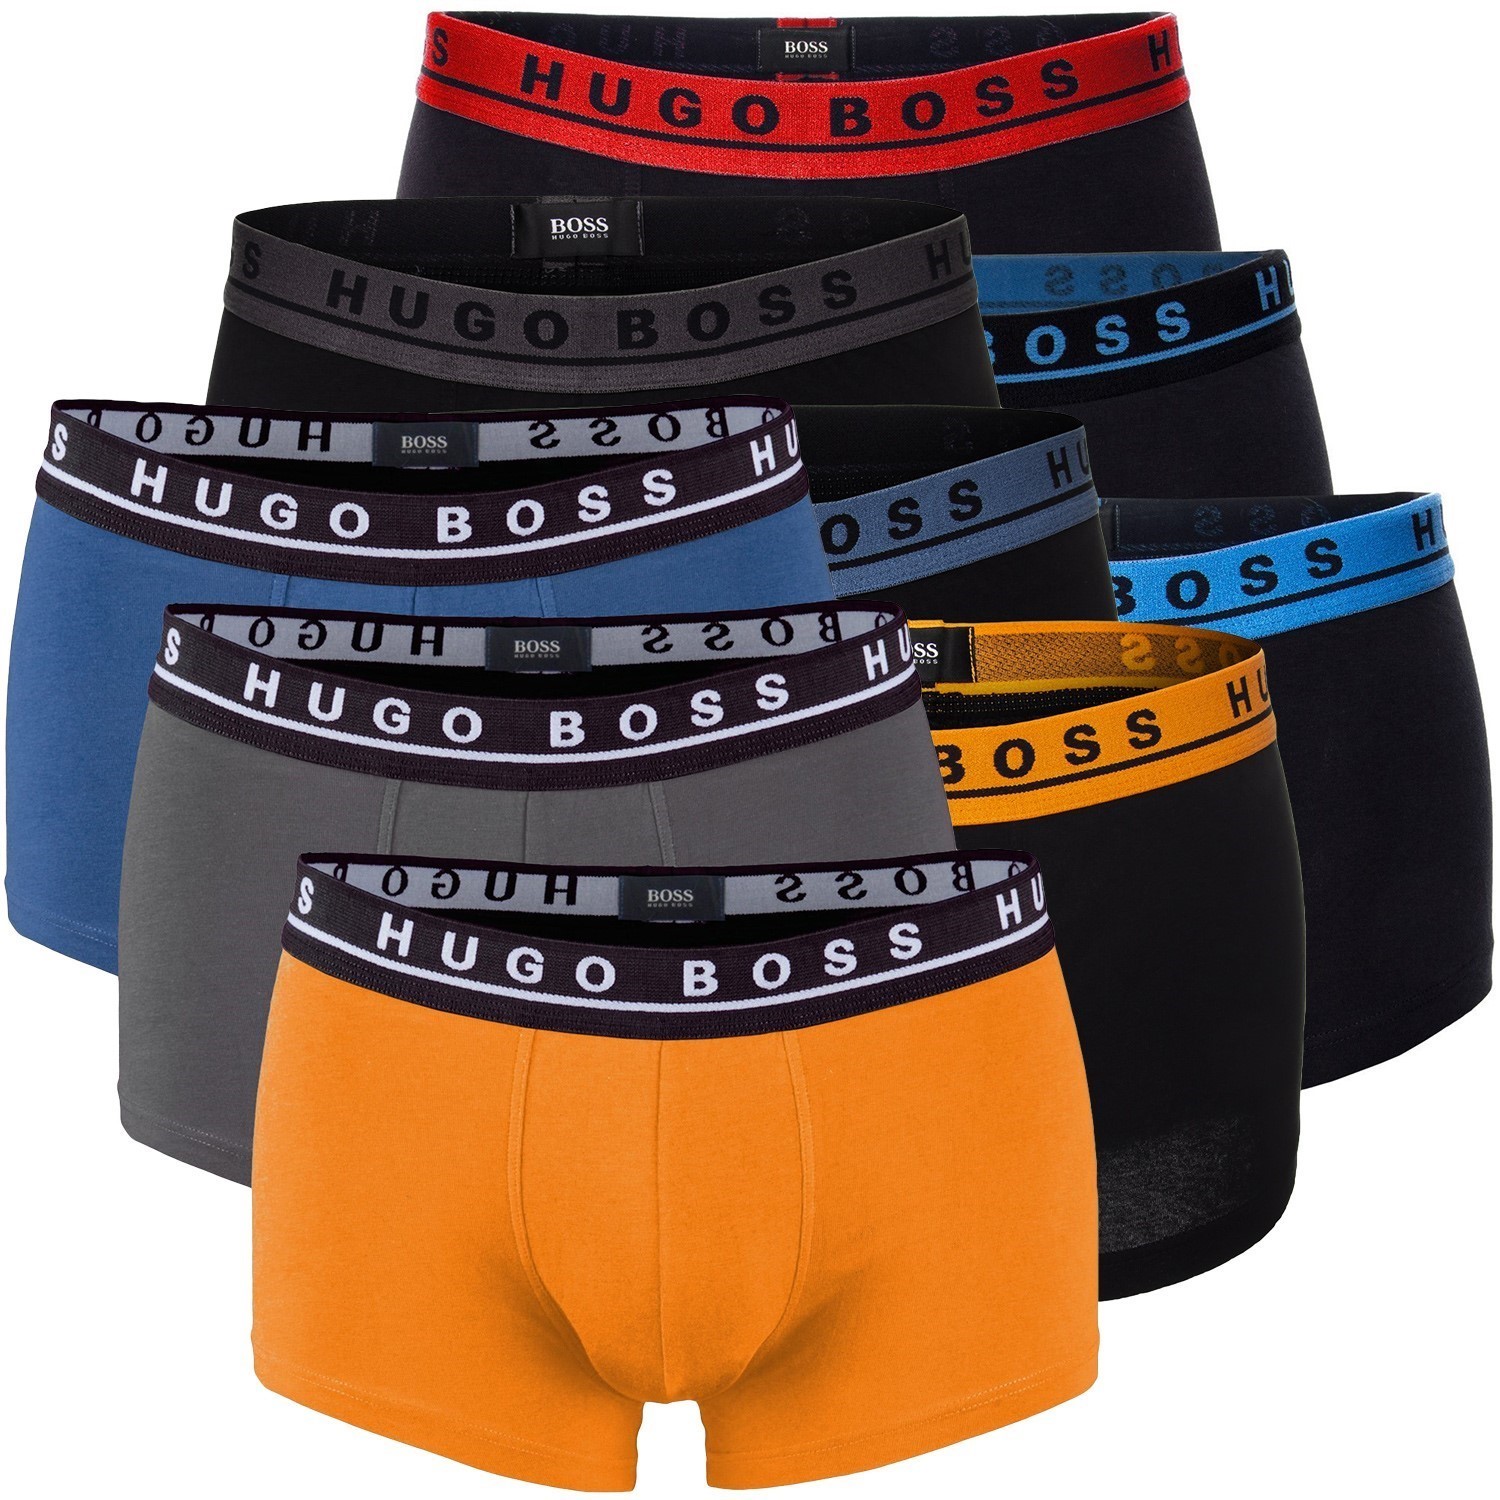 9-Pack Hugo Boss Stretch Cotton Trunk Mixpack - Boxer - Trunks - Underwear  - Timarco.eu